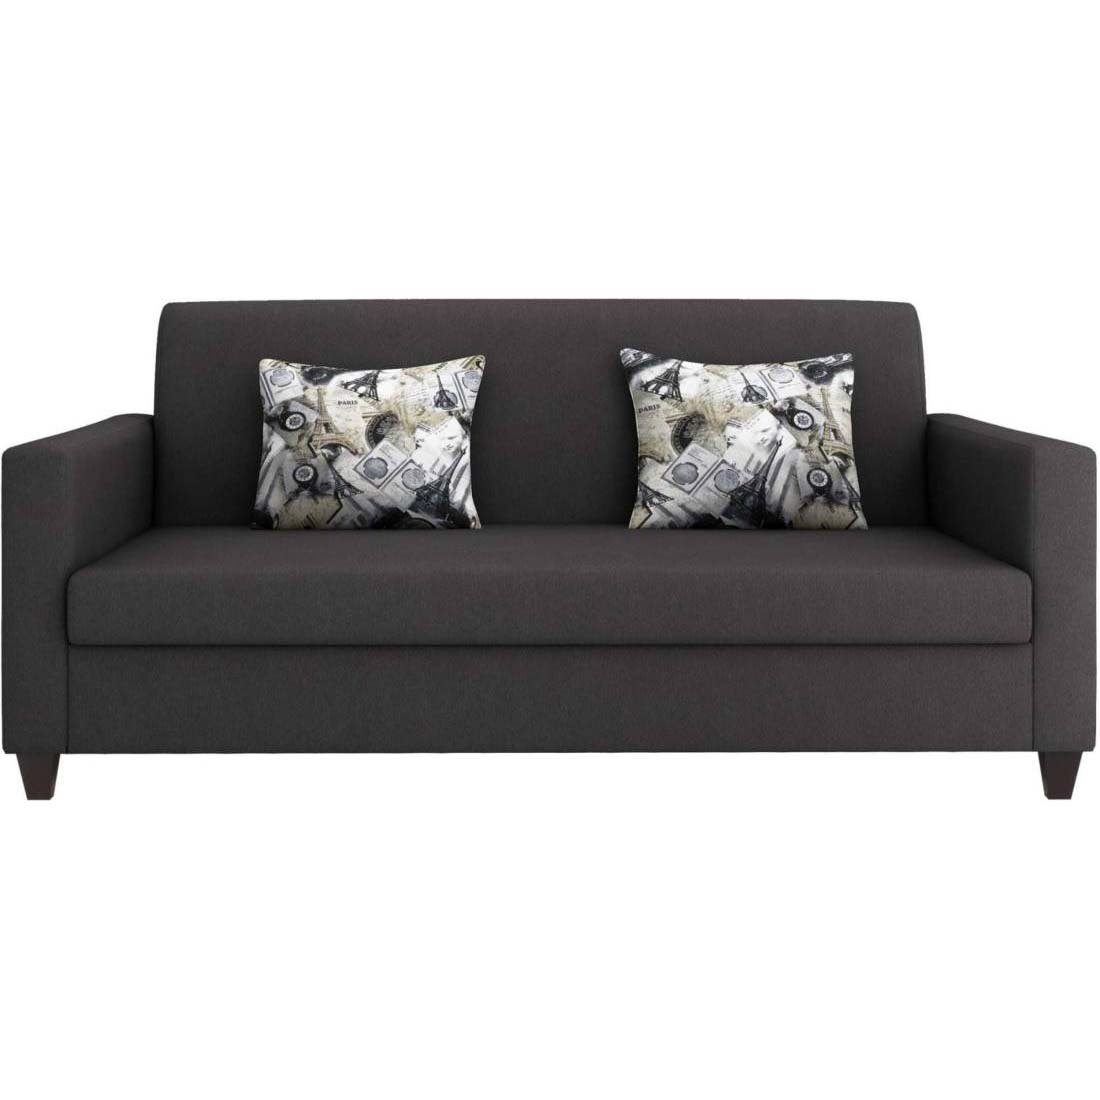 Torque India Marshall 3 Seater Fabric Sofa With Cushion For Living Room (Grey) - TorqueIndia